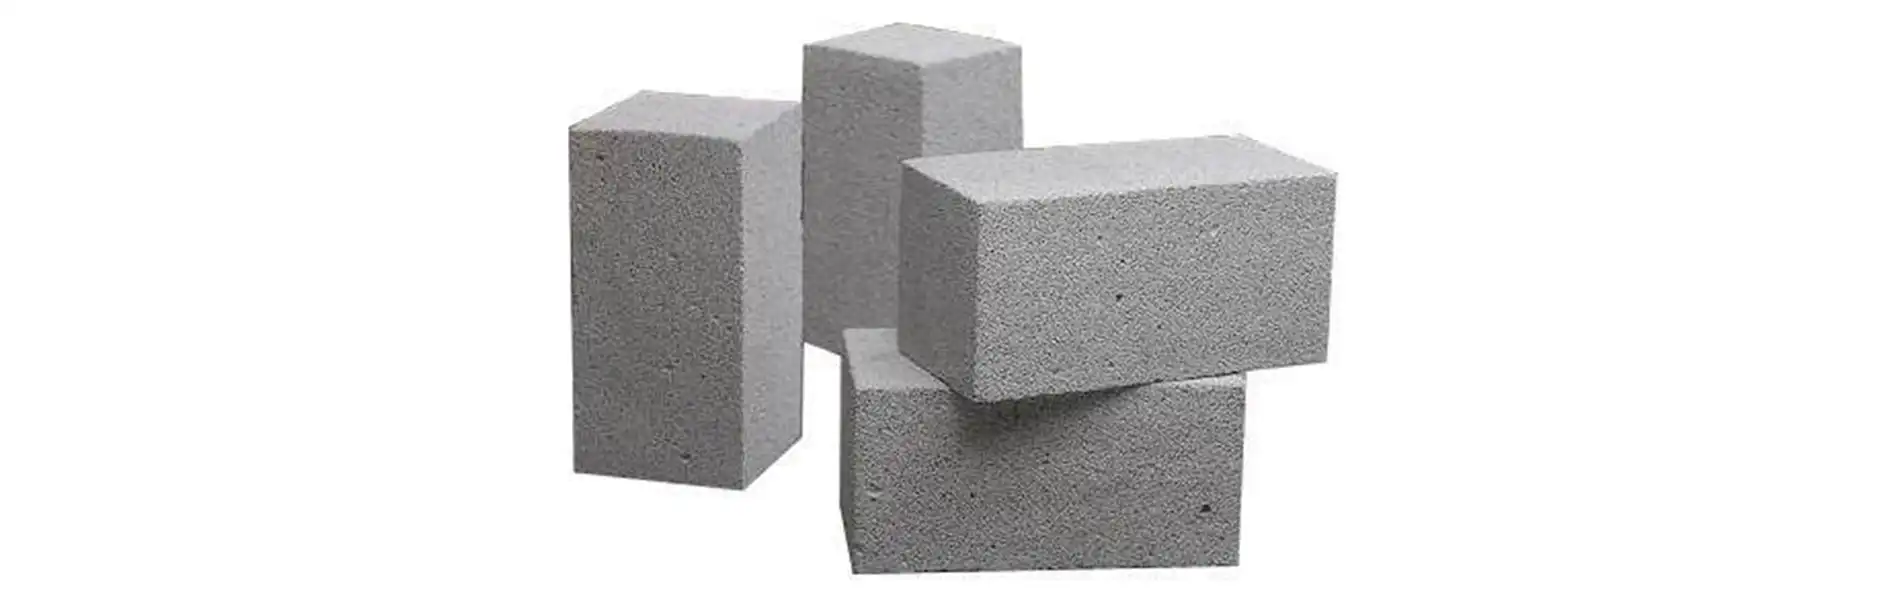 solid concrete blocks